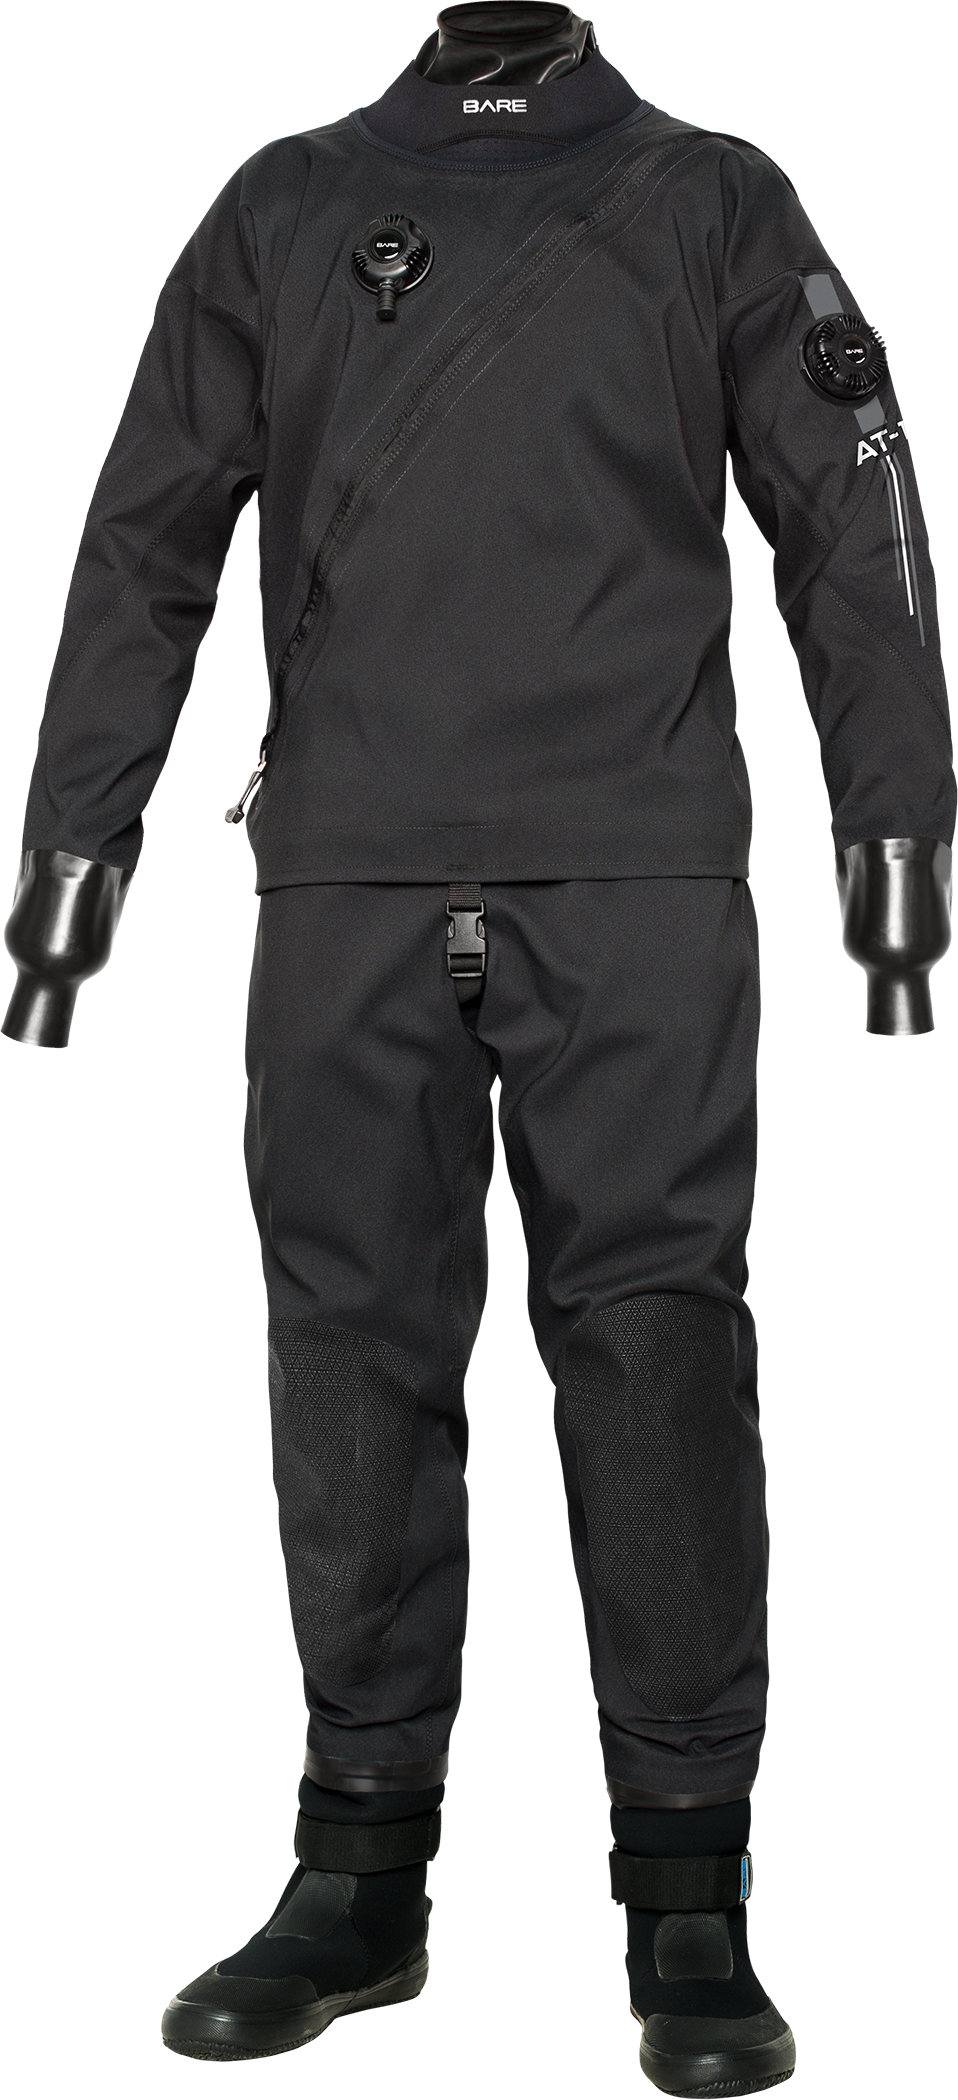 Bare Aqua-Trek 1 Men's Tech Dry Suit